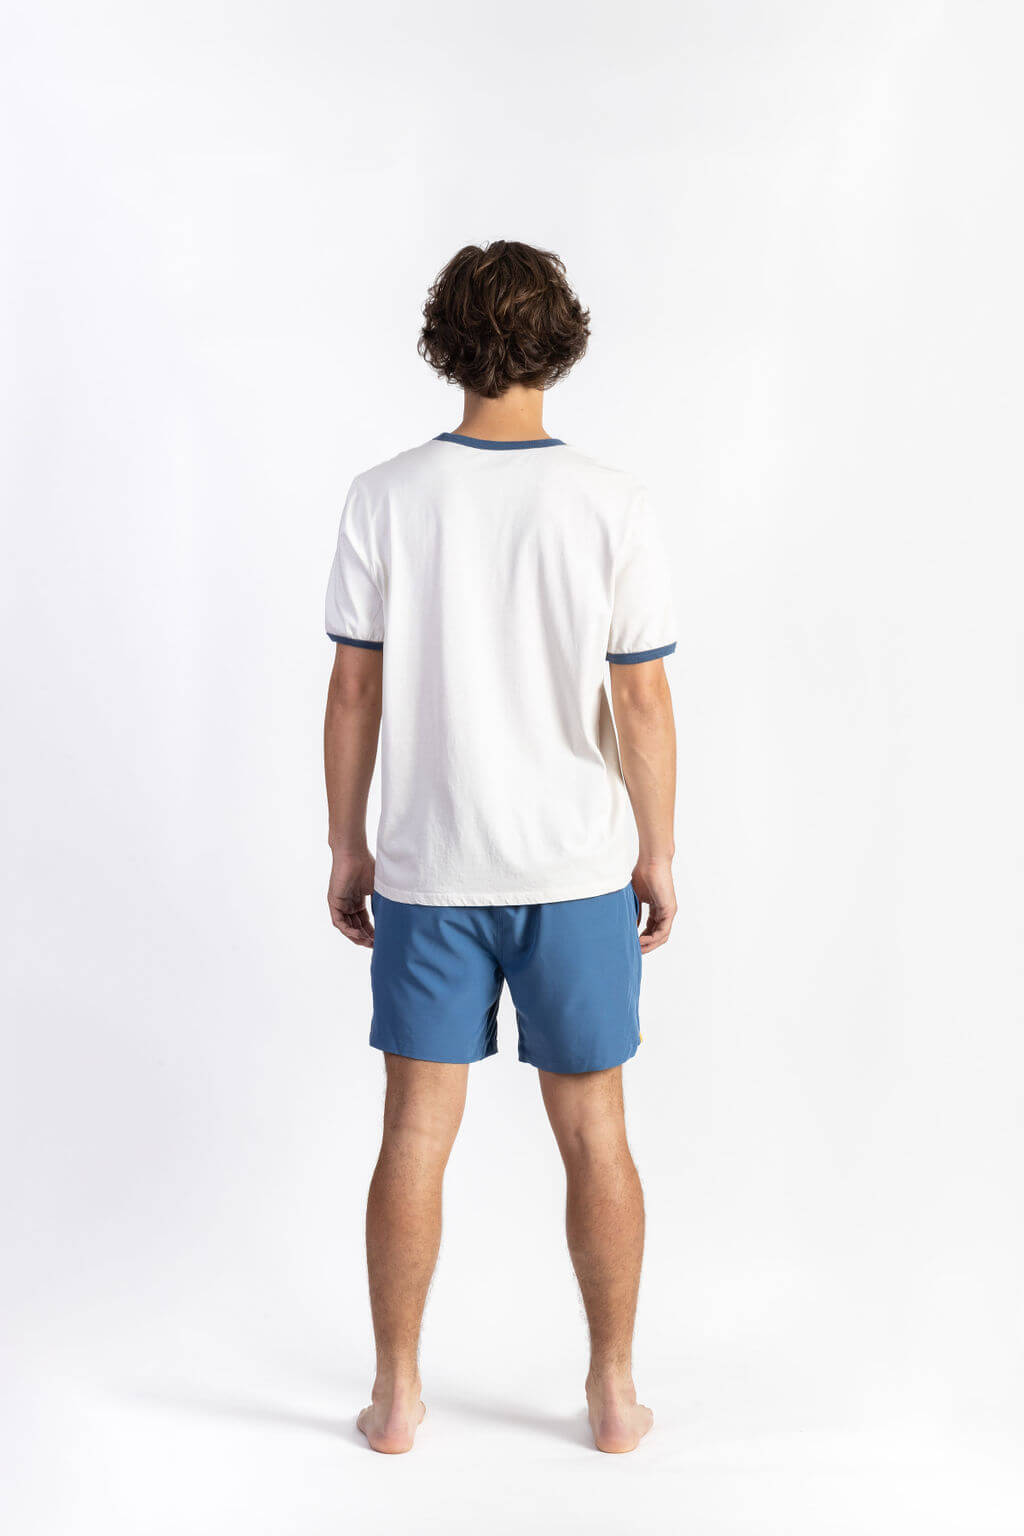 A man wearing an Off-white tee shirt having Manana branding with blue shorts